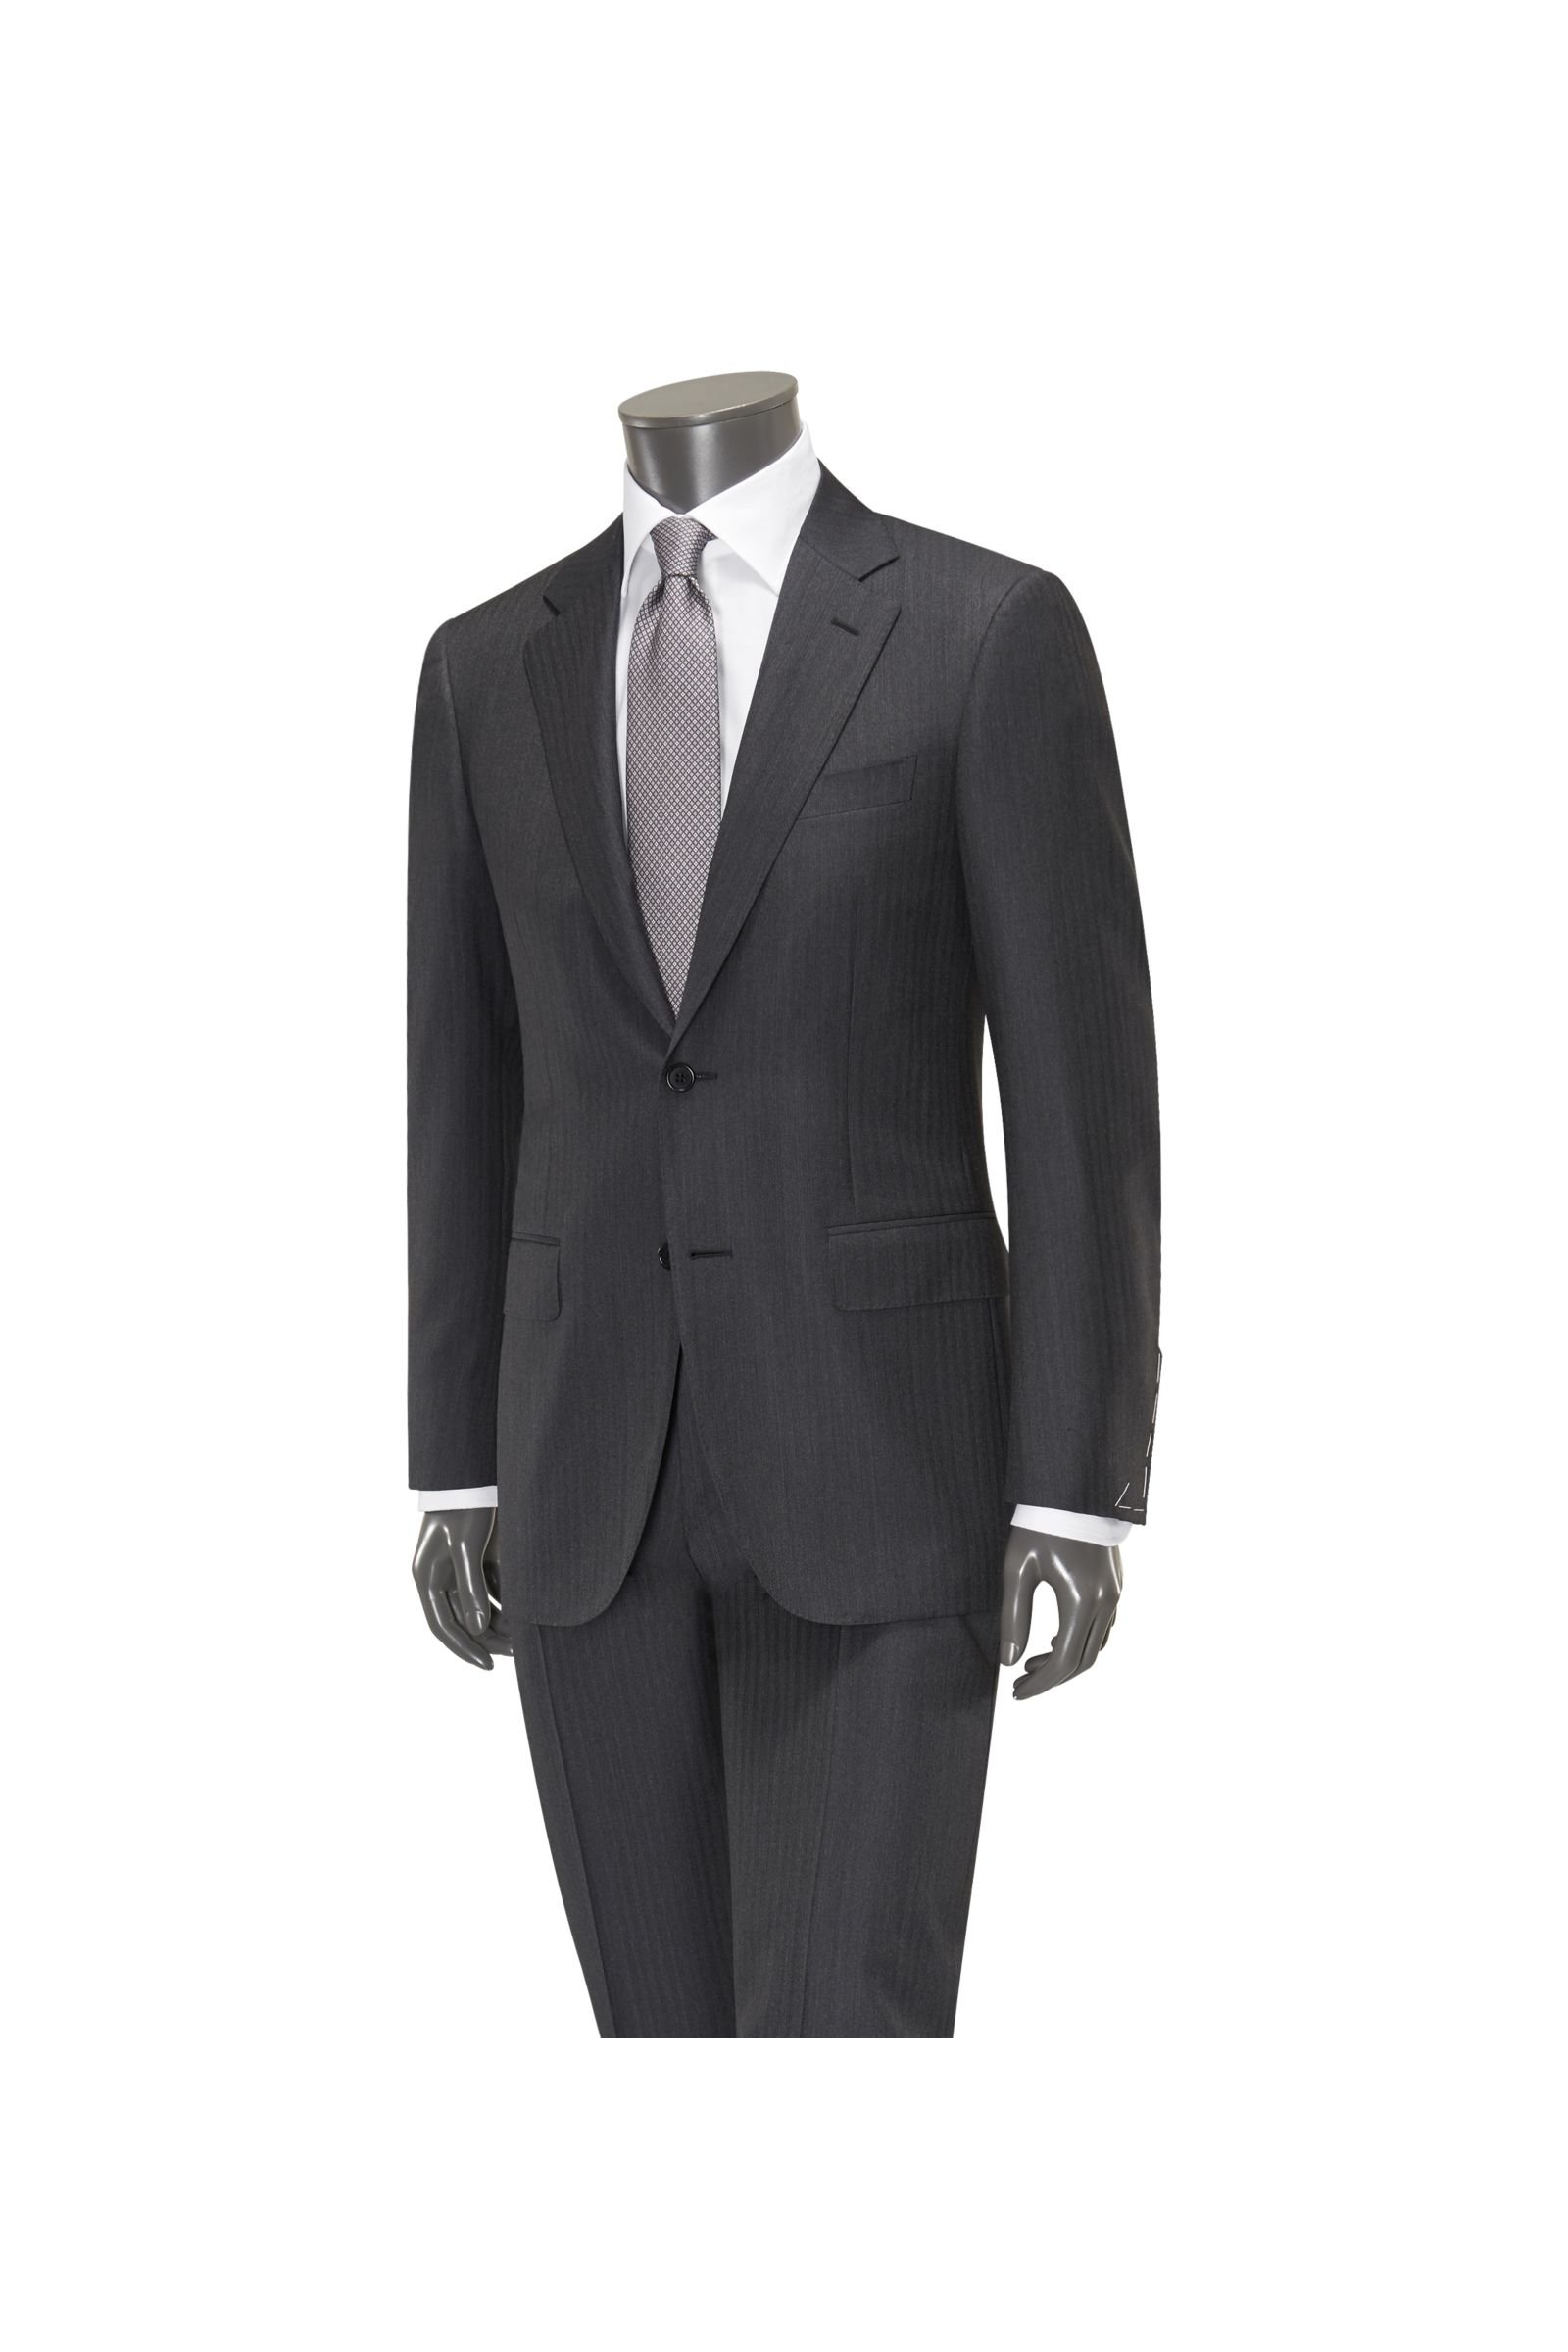 Suit dark grey patterned